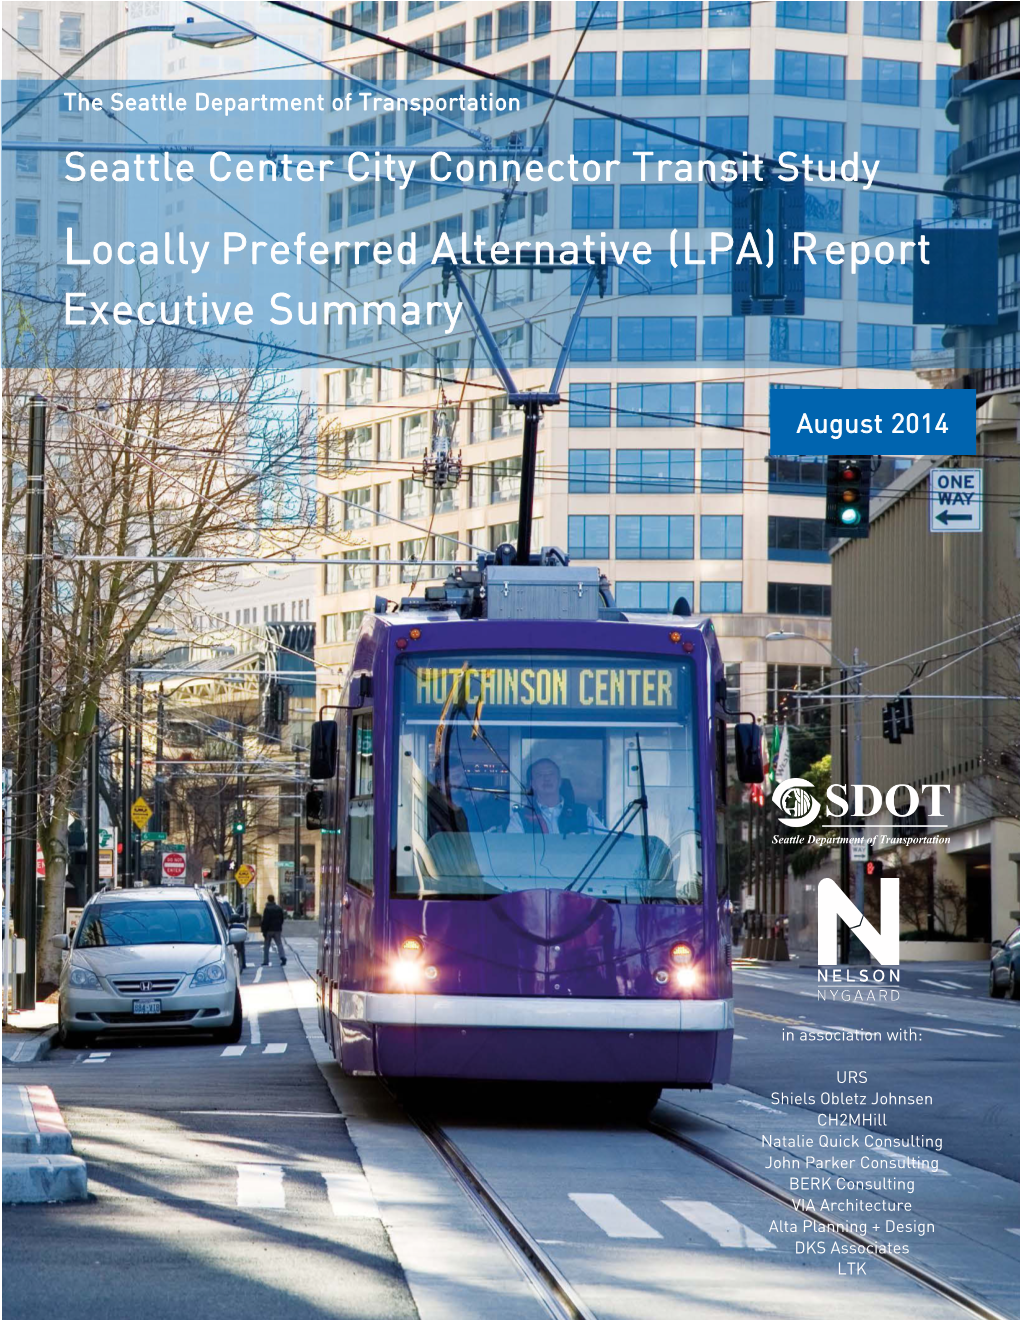 Seattle Center City Connector Transit Study LPA Report